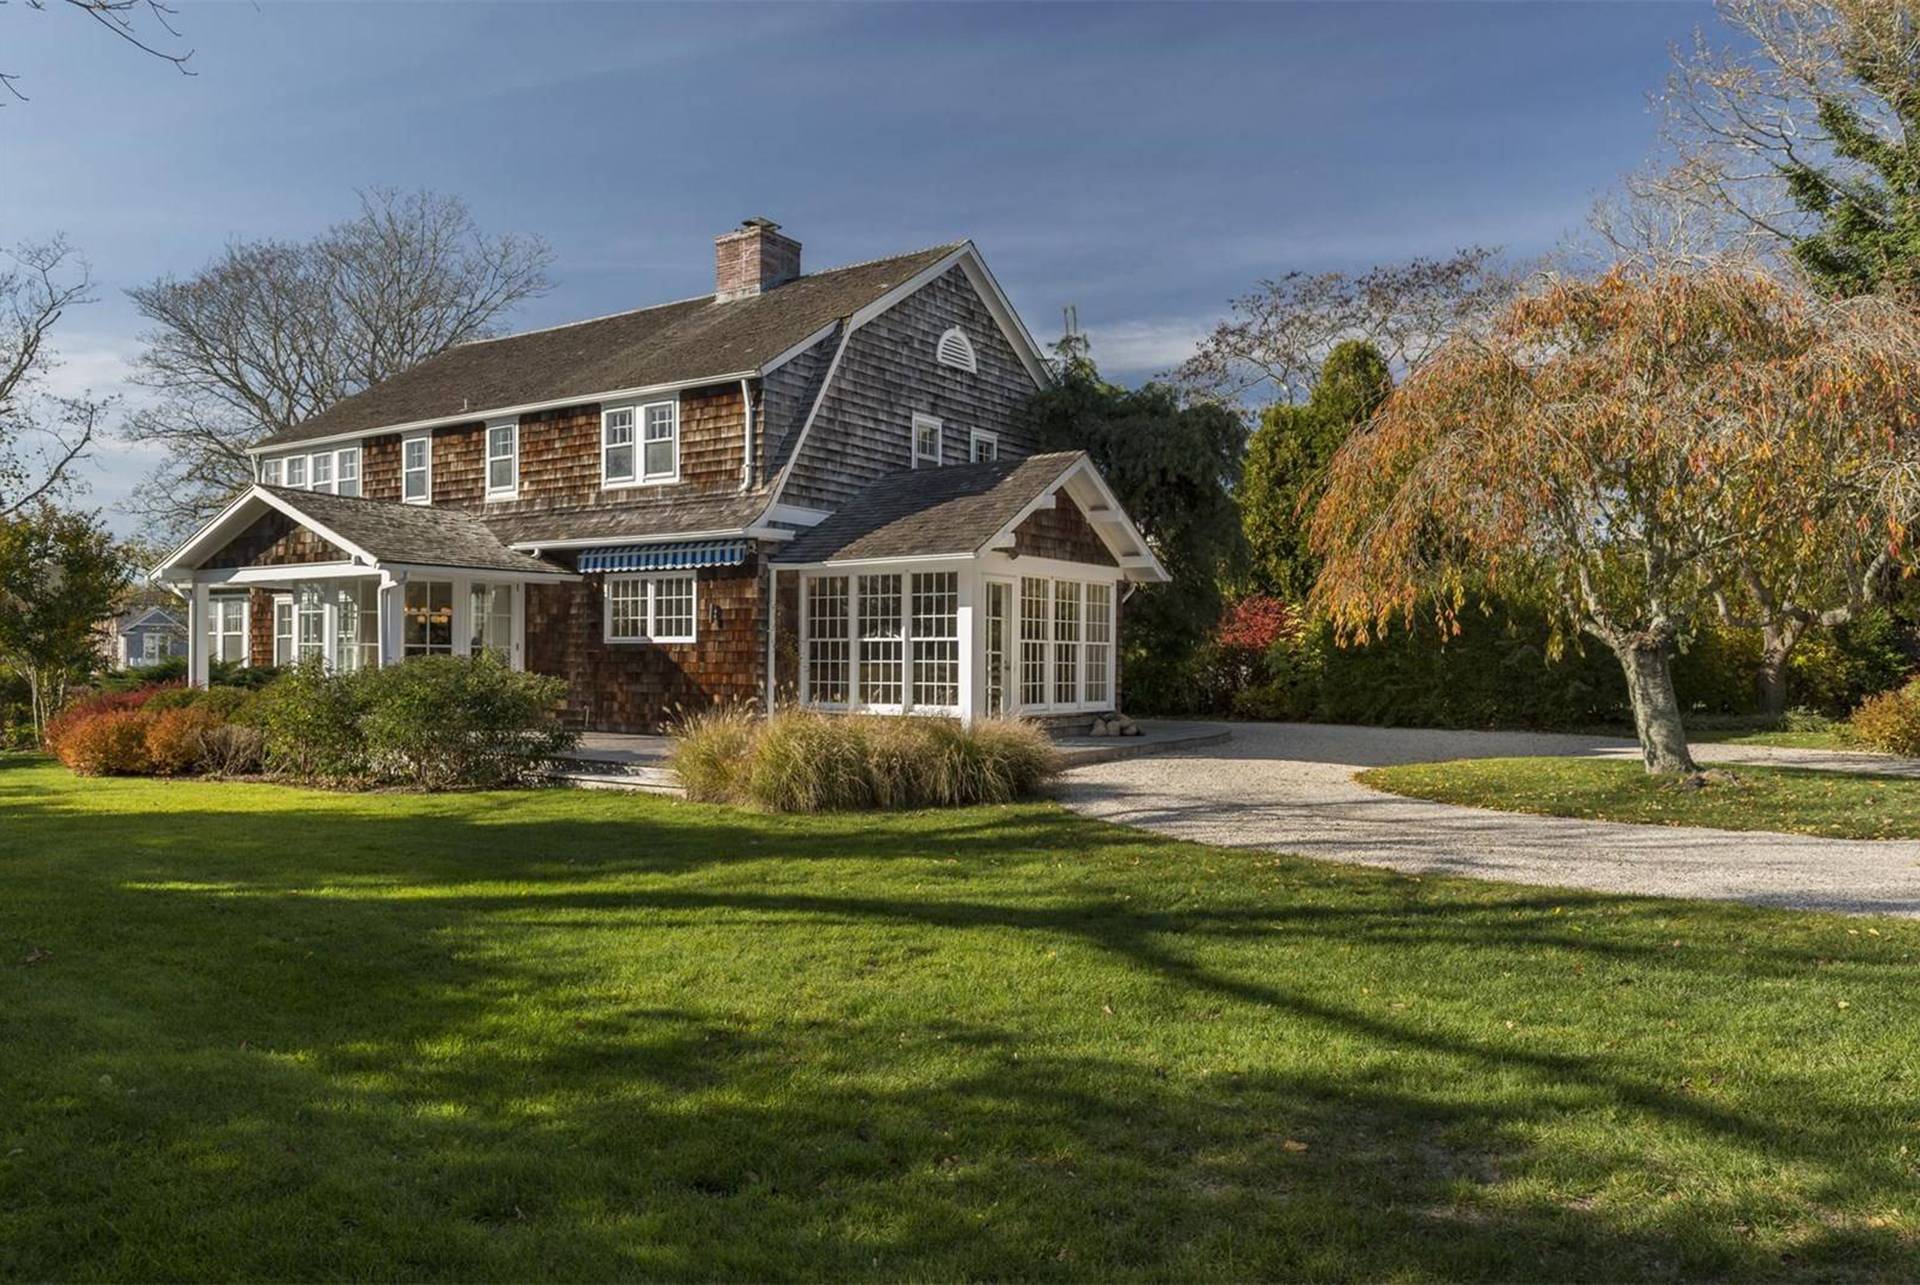 Rental Property at Village Of East Hampton, Village Of East Hampton, Hamptons, NY - Bedrooms: 4 
Bathrooms: 3  - $78,000 MO.